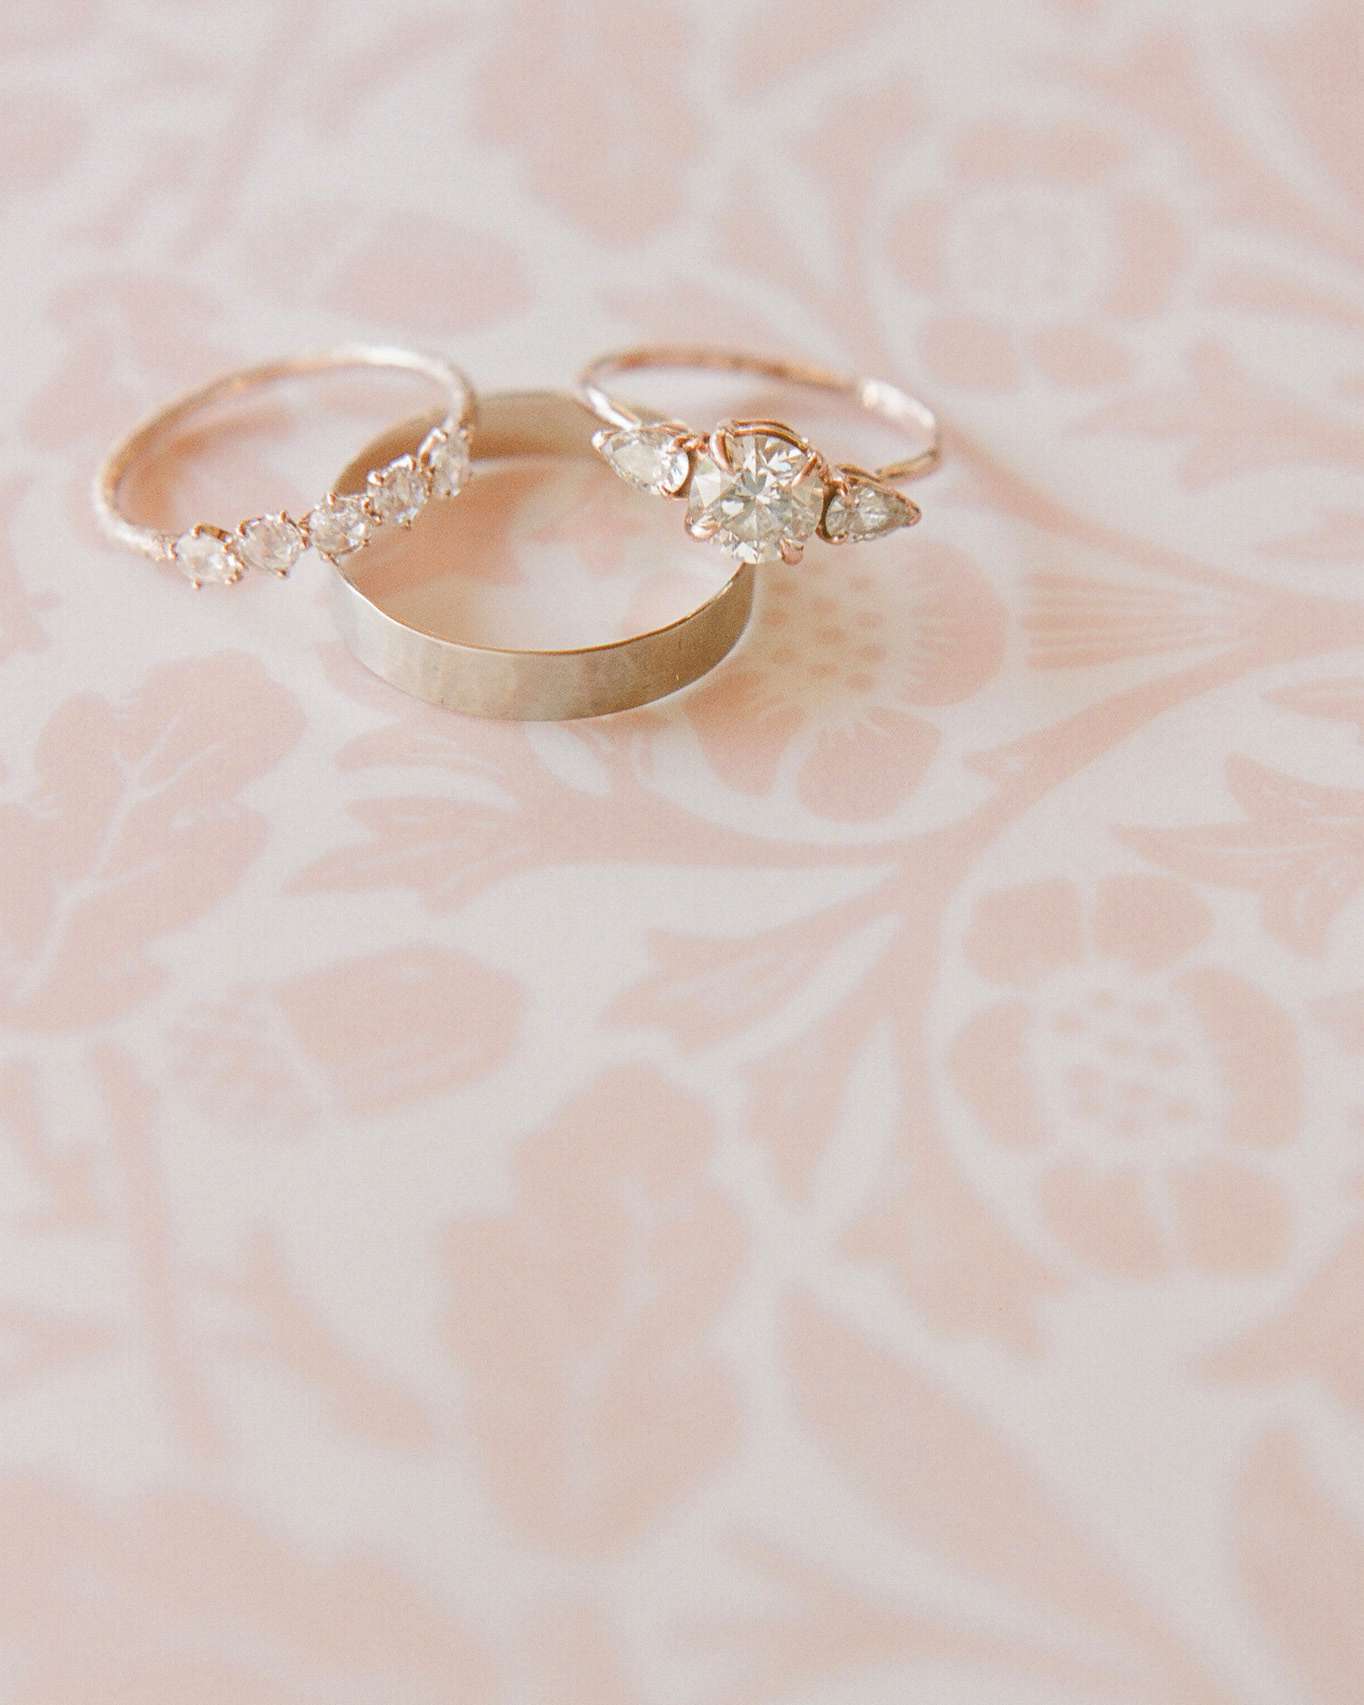 Family Tronet Engagement Rings for Women Rose Gold Diamond Ring Natural White Romantic Wedding JewelryGift for a Girlfriend Boyfriend 